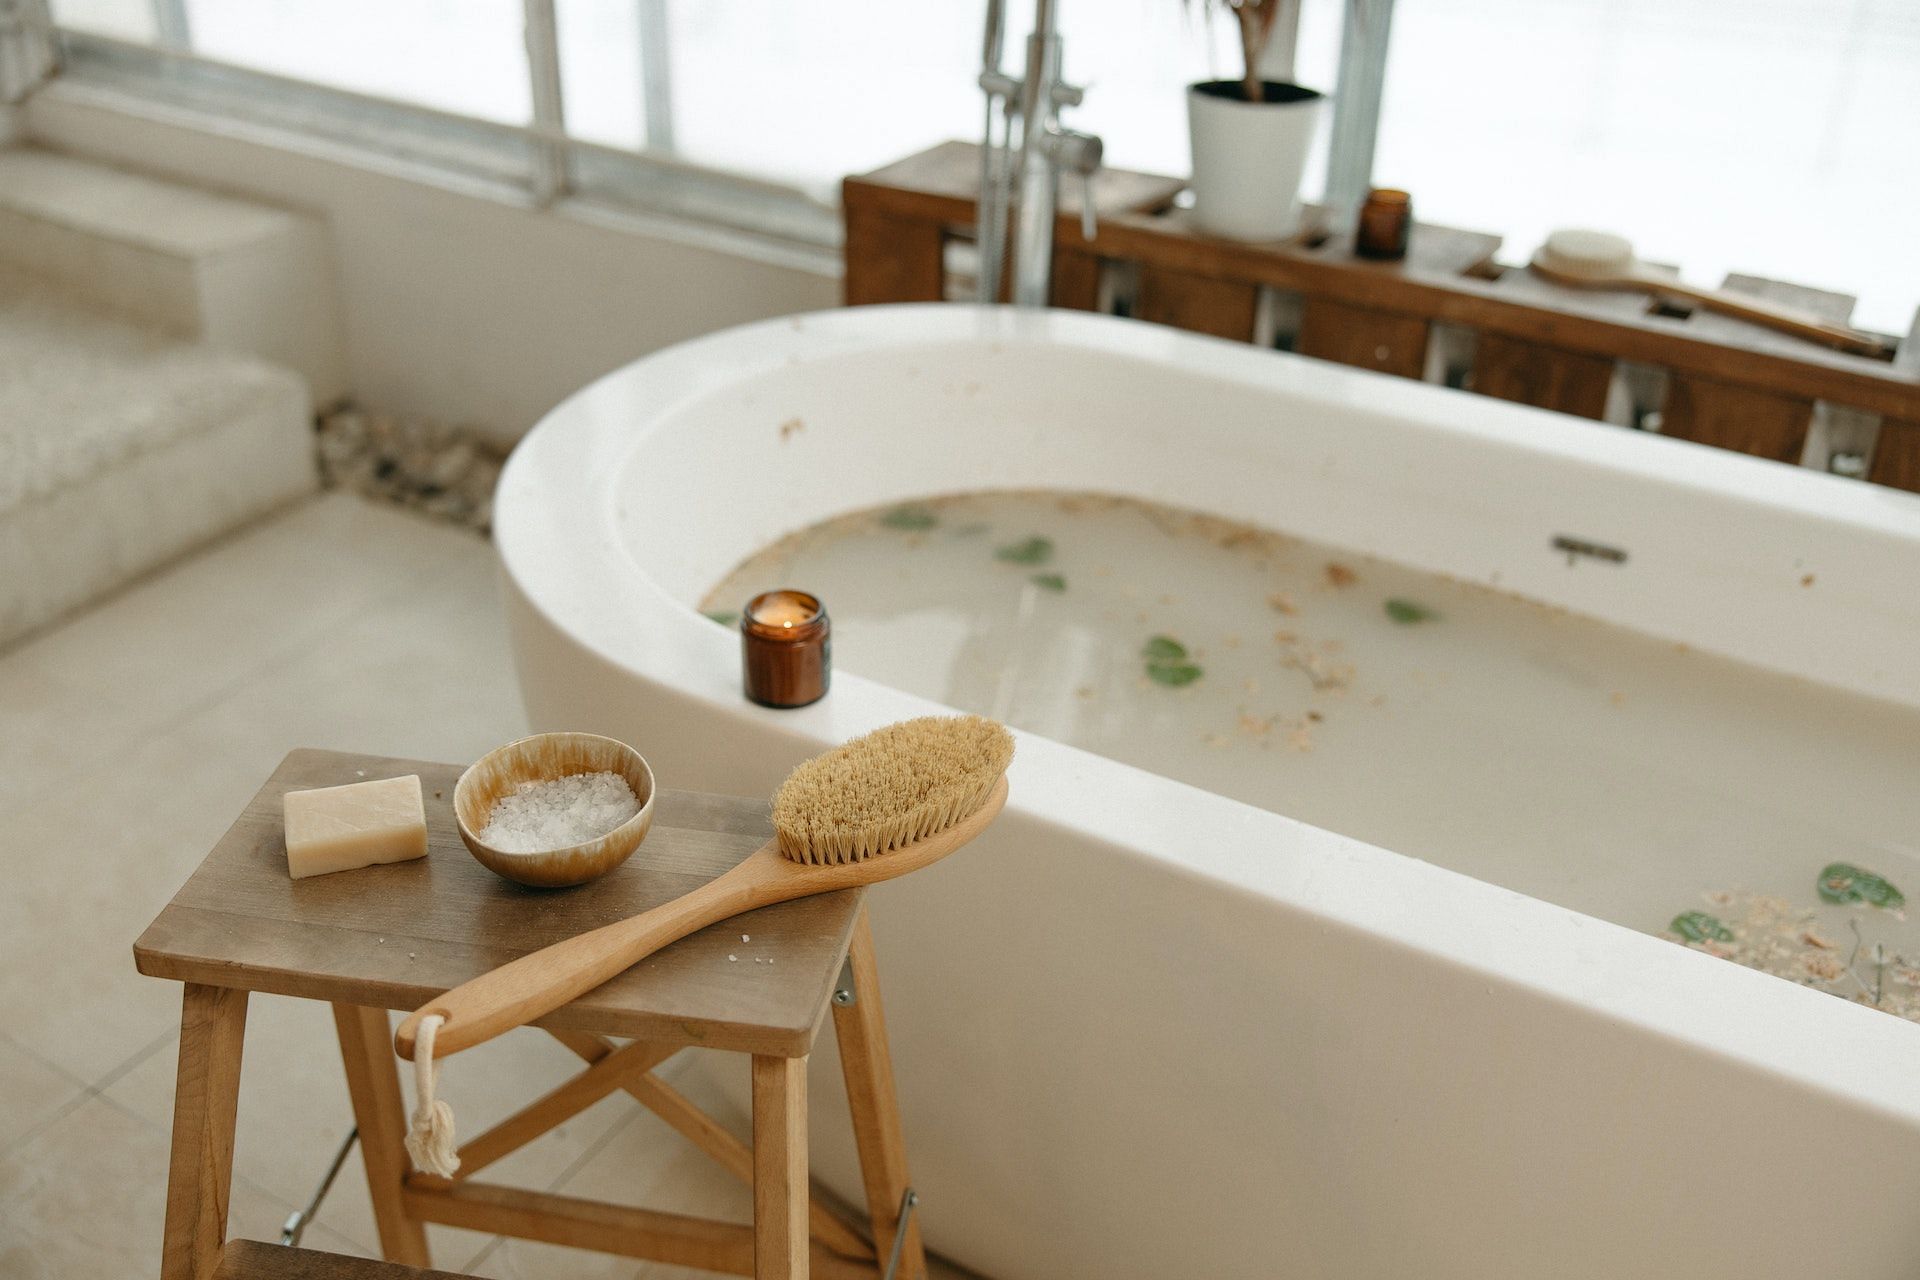 Epsom salt bath can relax muscles. (Photo via Pexels/Yaroslav Shuraev)